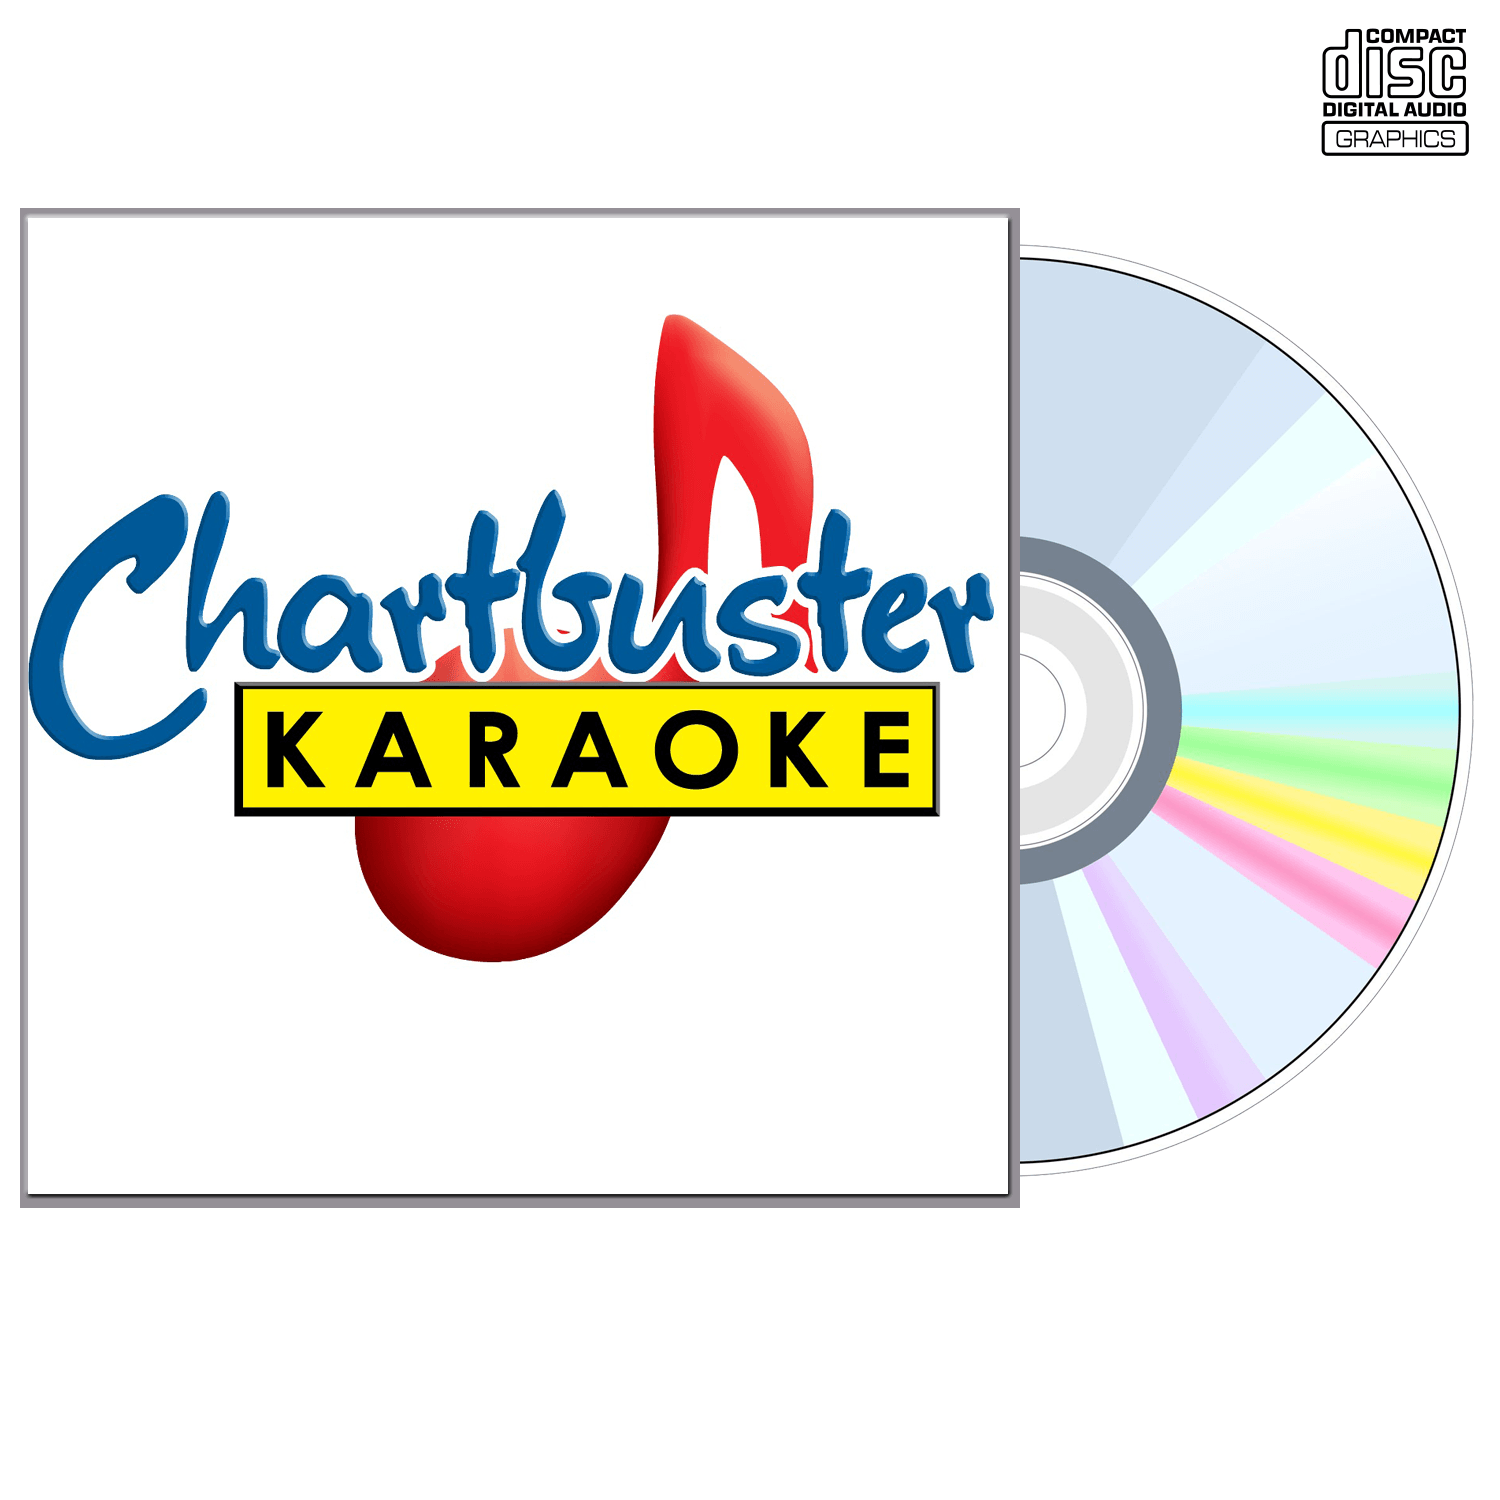 Best Of Blake Shelton - CD+G - Chartbuster Karaoke - Karaoke Home Entertainment